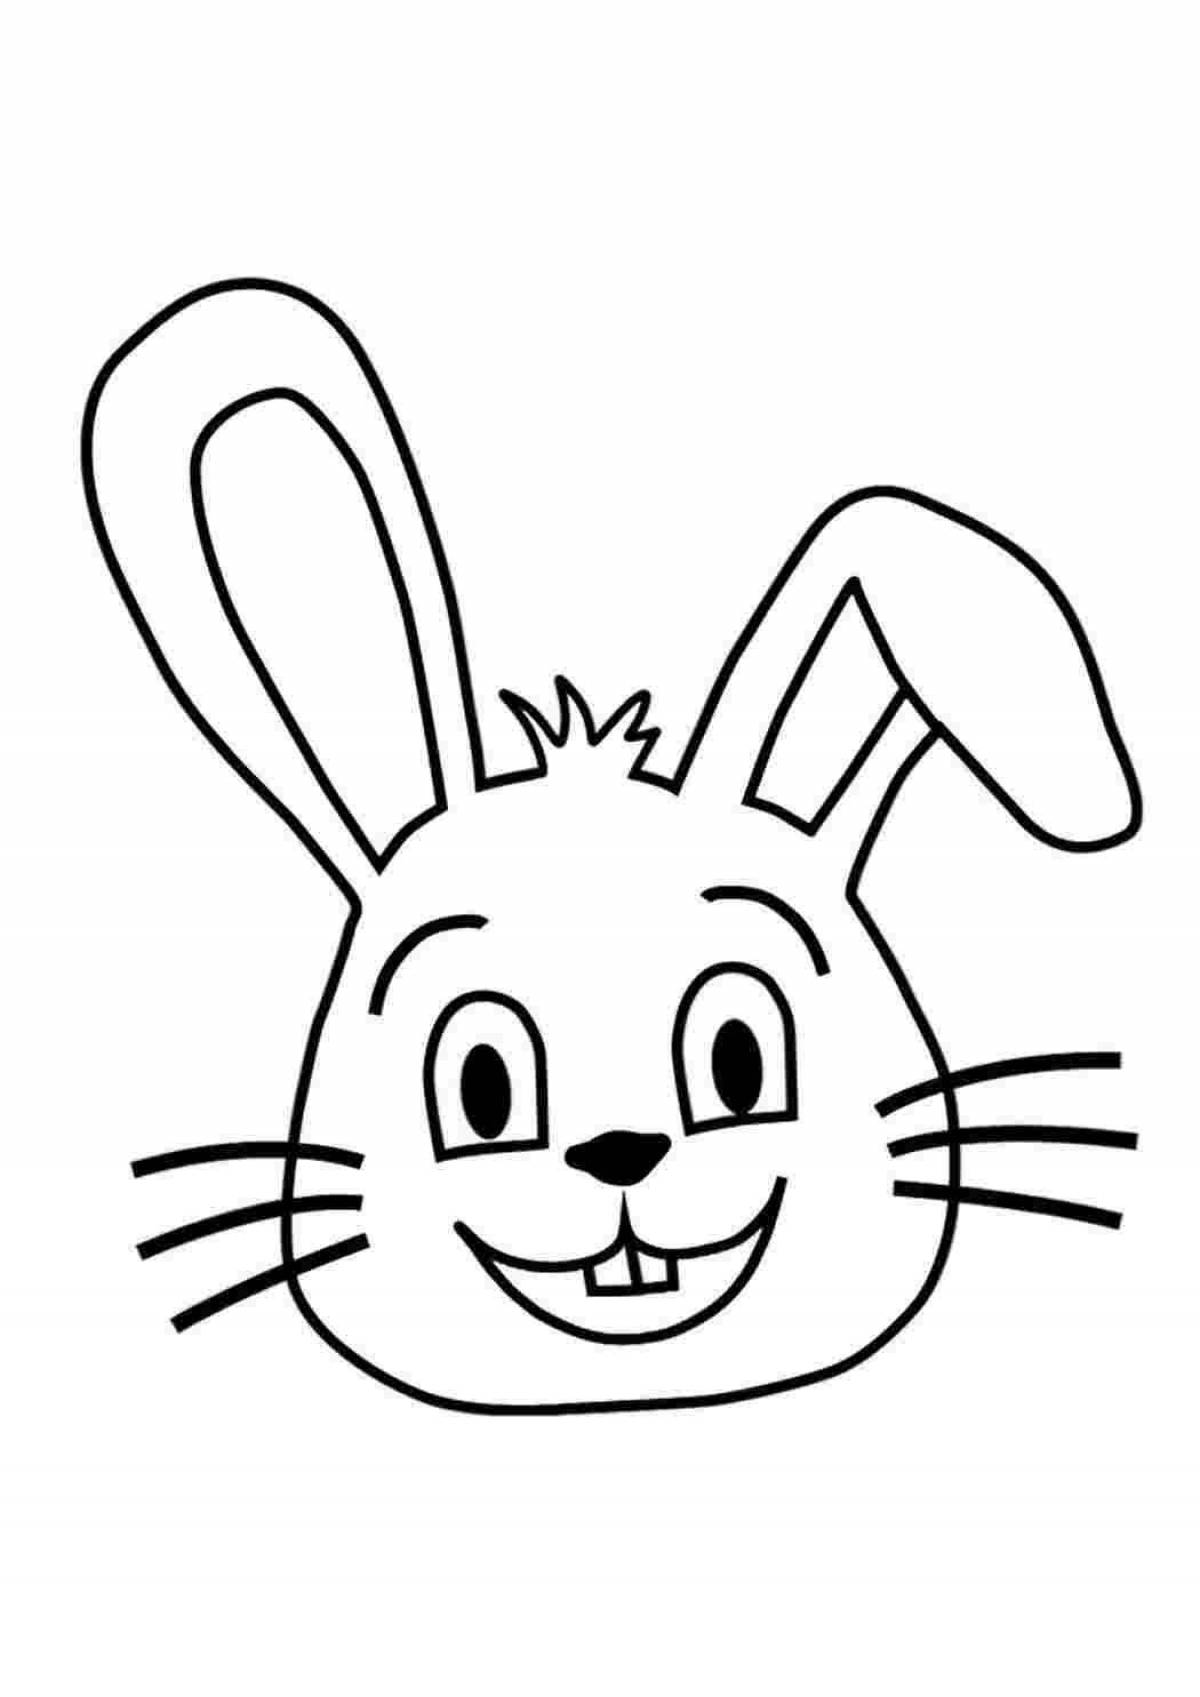 Coloring plush rabbit head